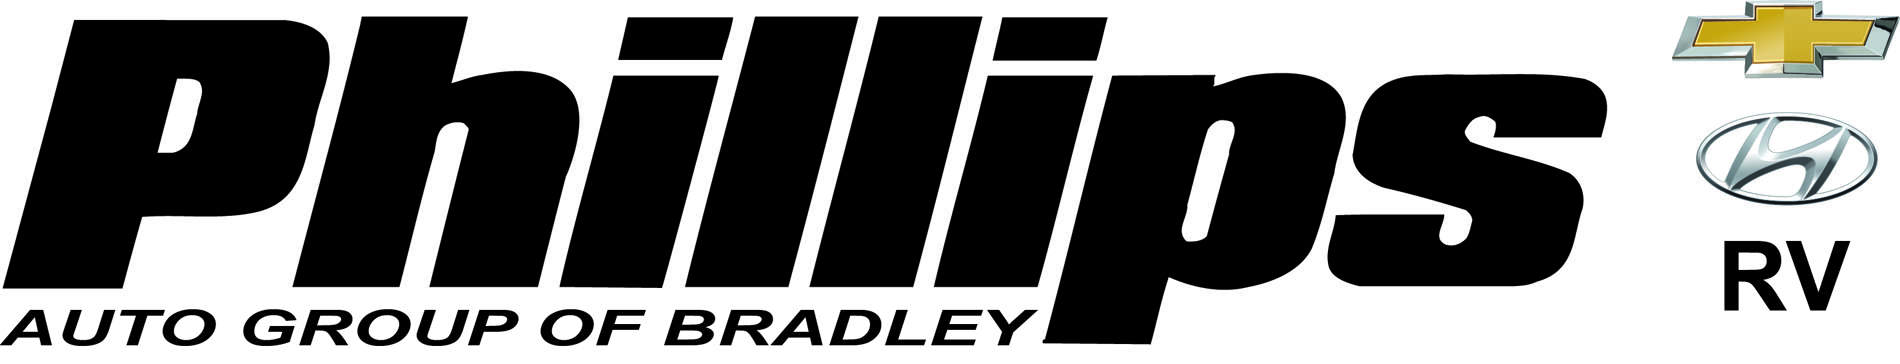 Phillips Auto Group of Bradley, Inc. Logo